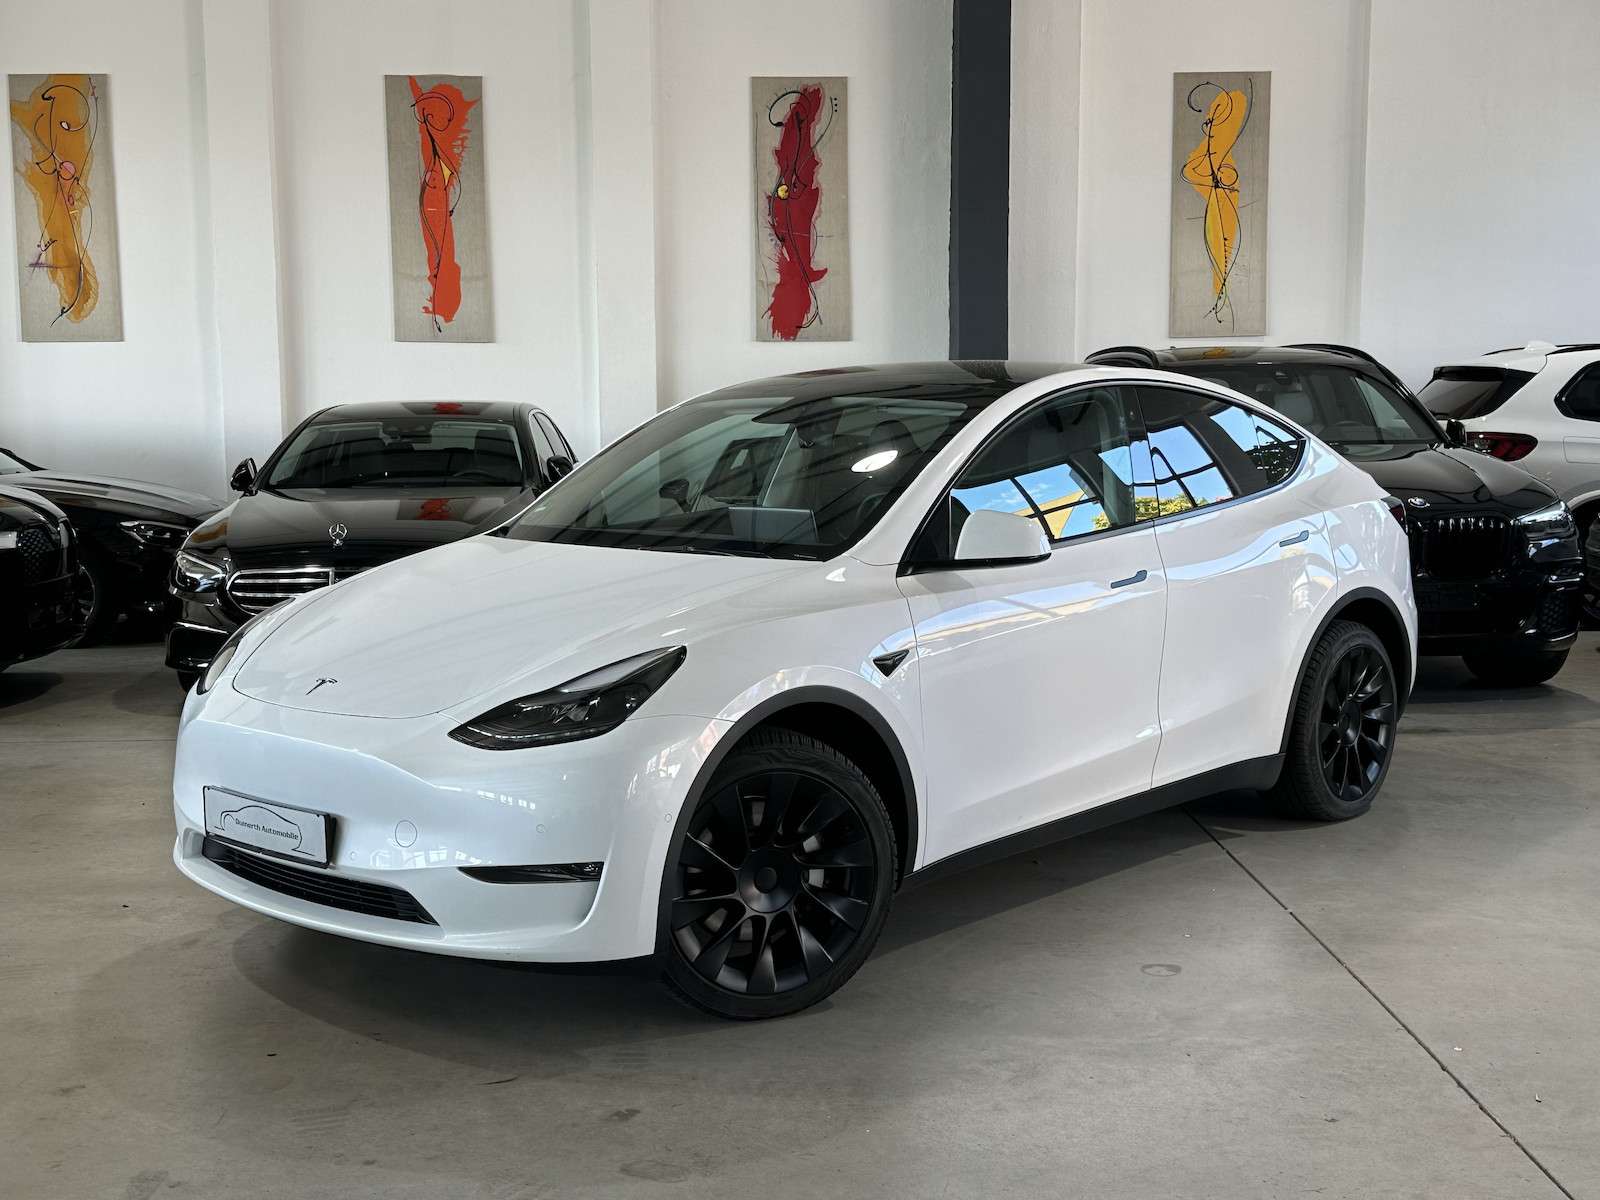 Tesla Model Y Sedan in White used in Frankfurt am Main for € 49,380.-